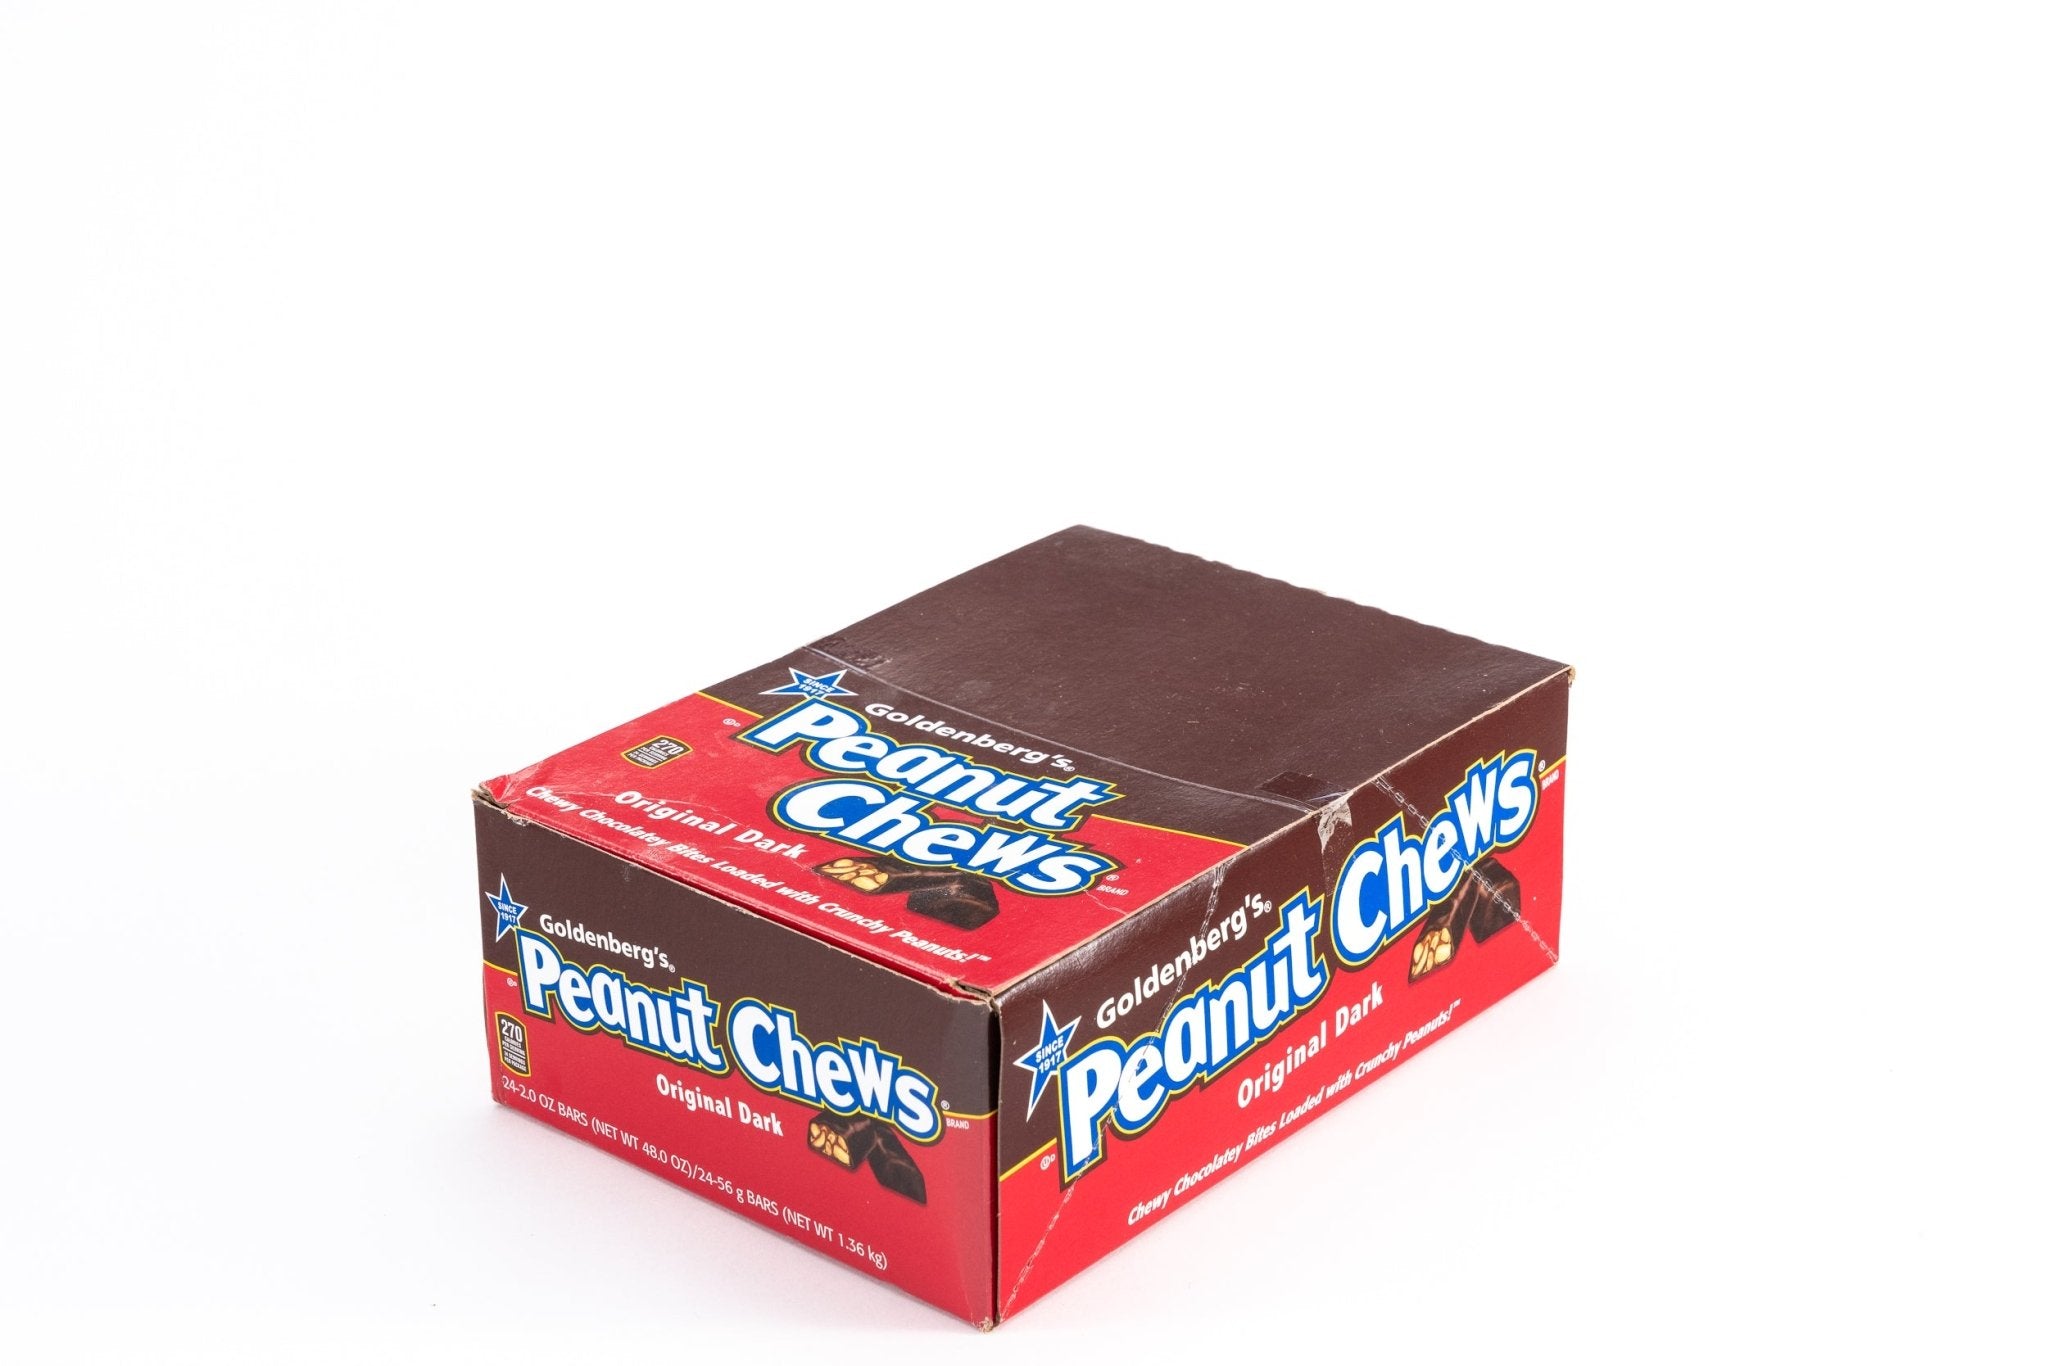 Peanut Chews 2 oz - Vintage Candy Co.